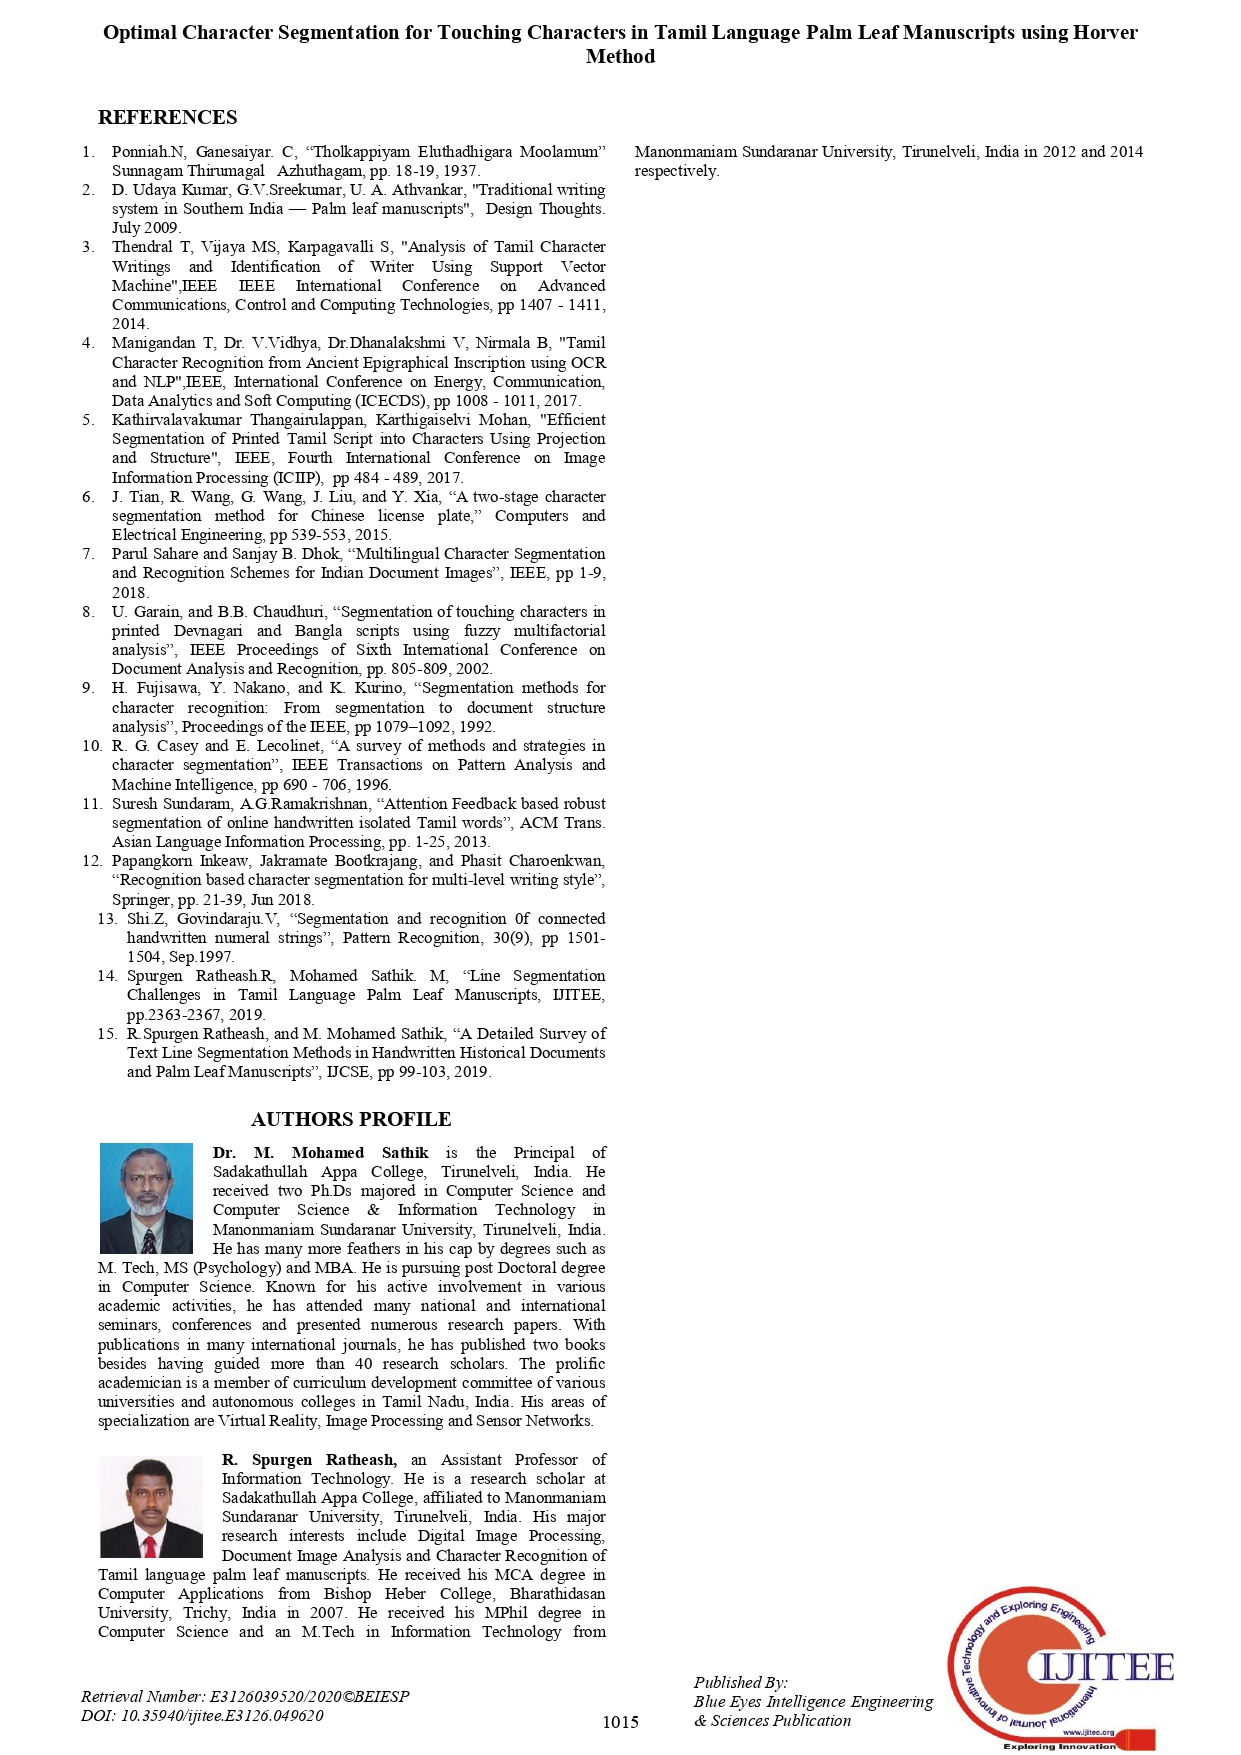 Sadakathullah Appa College-article_page-0006.jpg